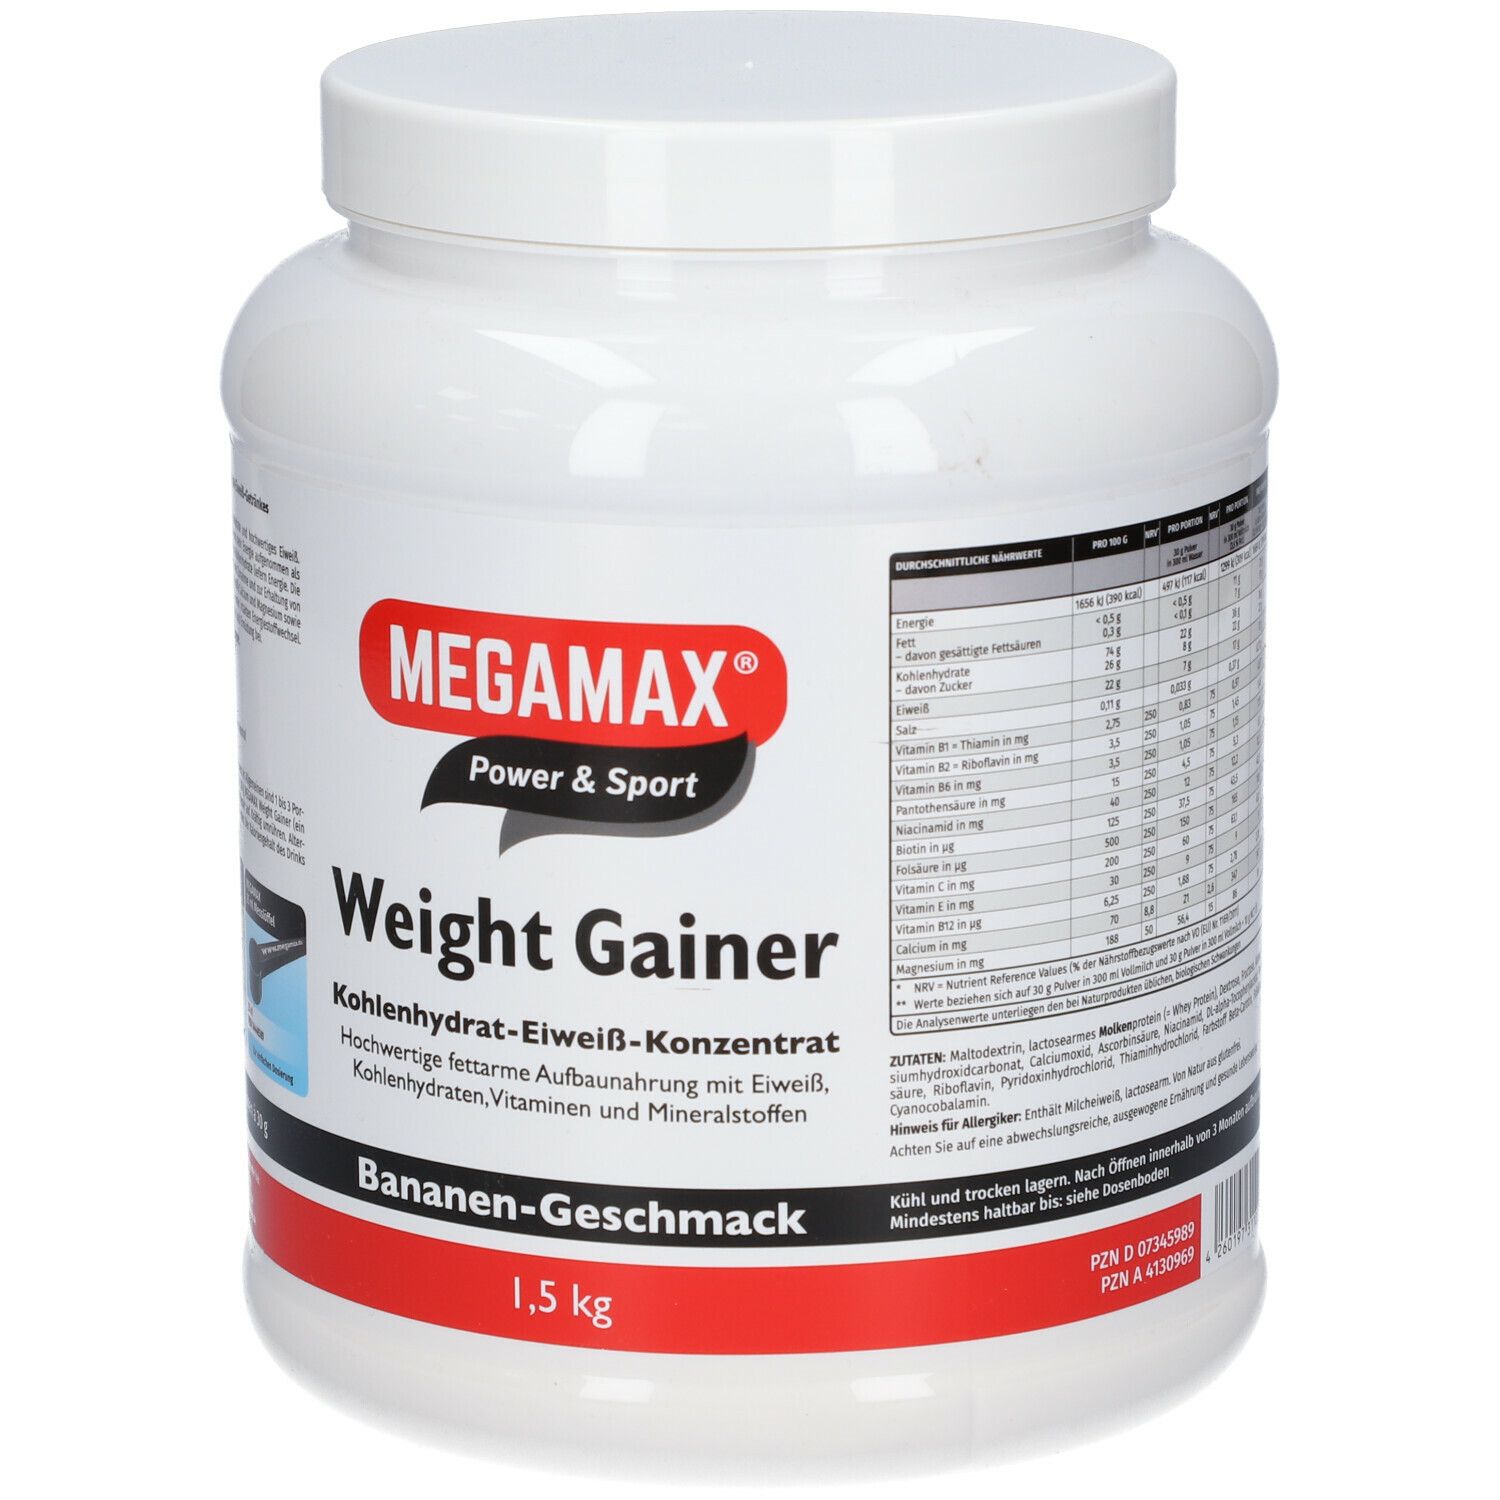 MEGAMAX® Power & Sport Weight Gainer Kohlenhydrat-Eiweiß-Konzentrat Bananen-Geschmack